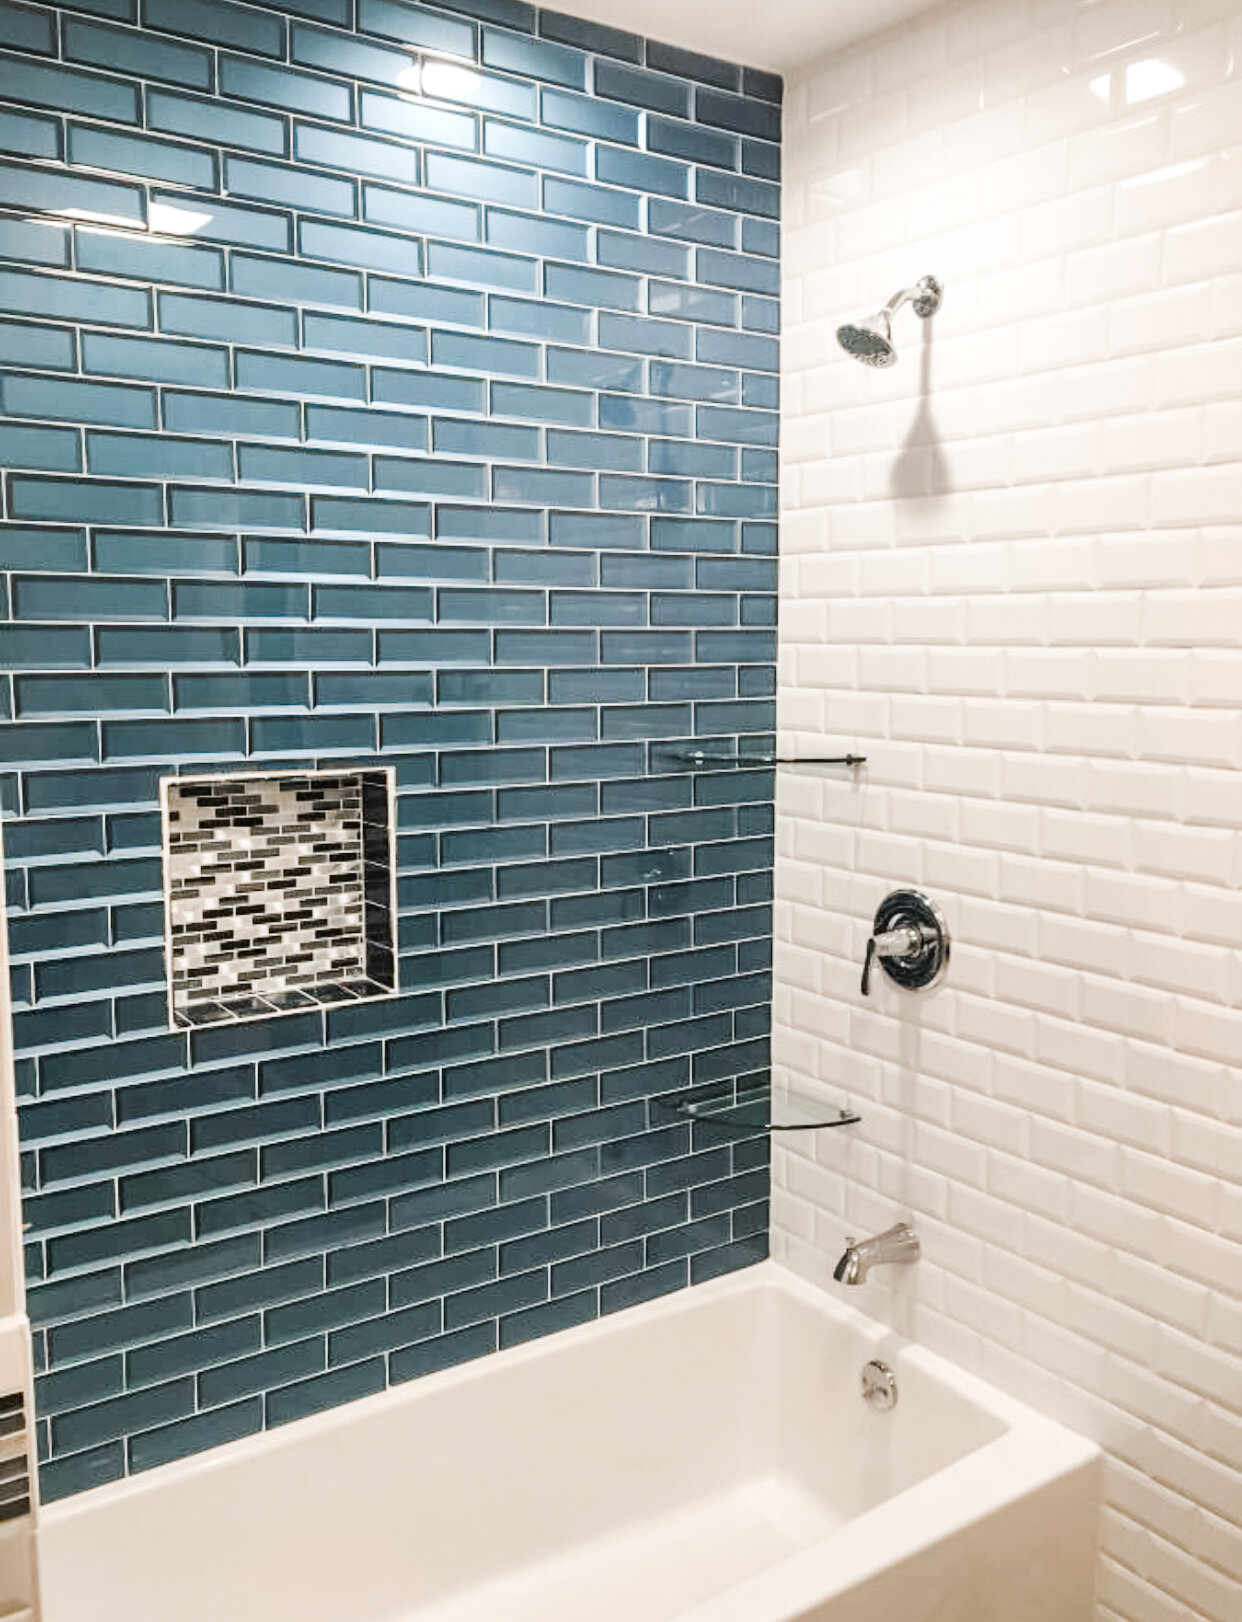 libertyville bathroom remodel 1 lotus home improvement.jpg